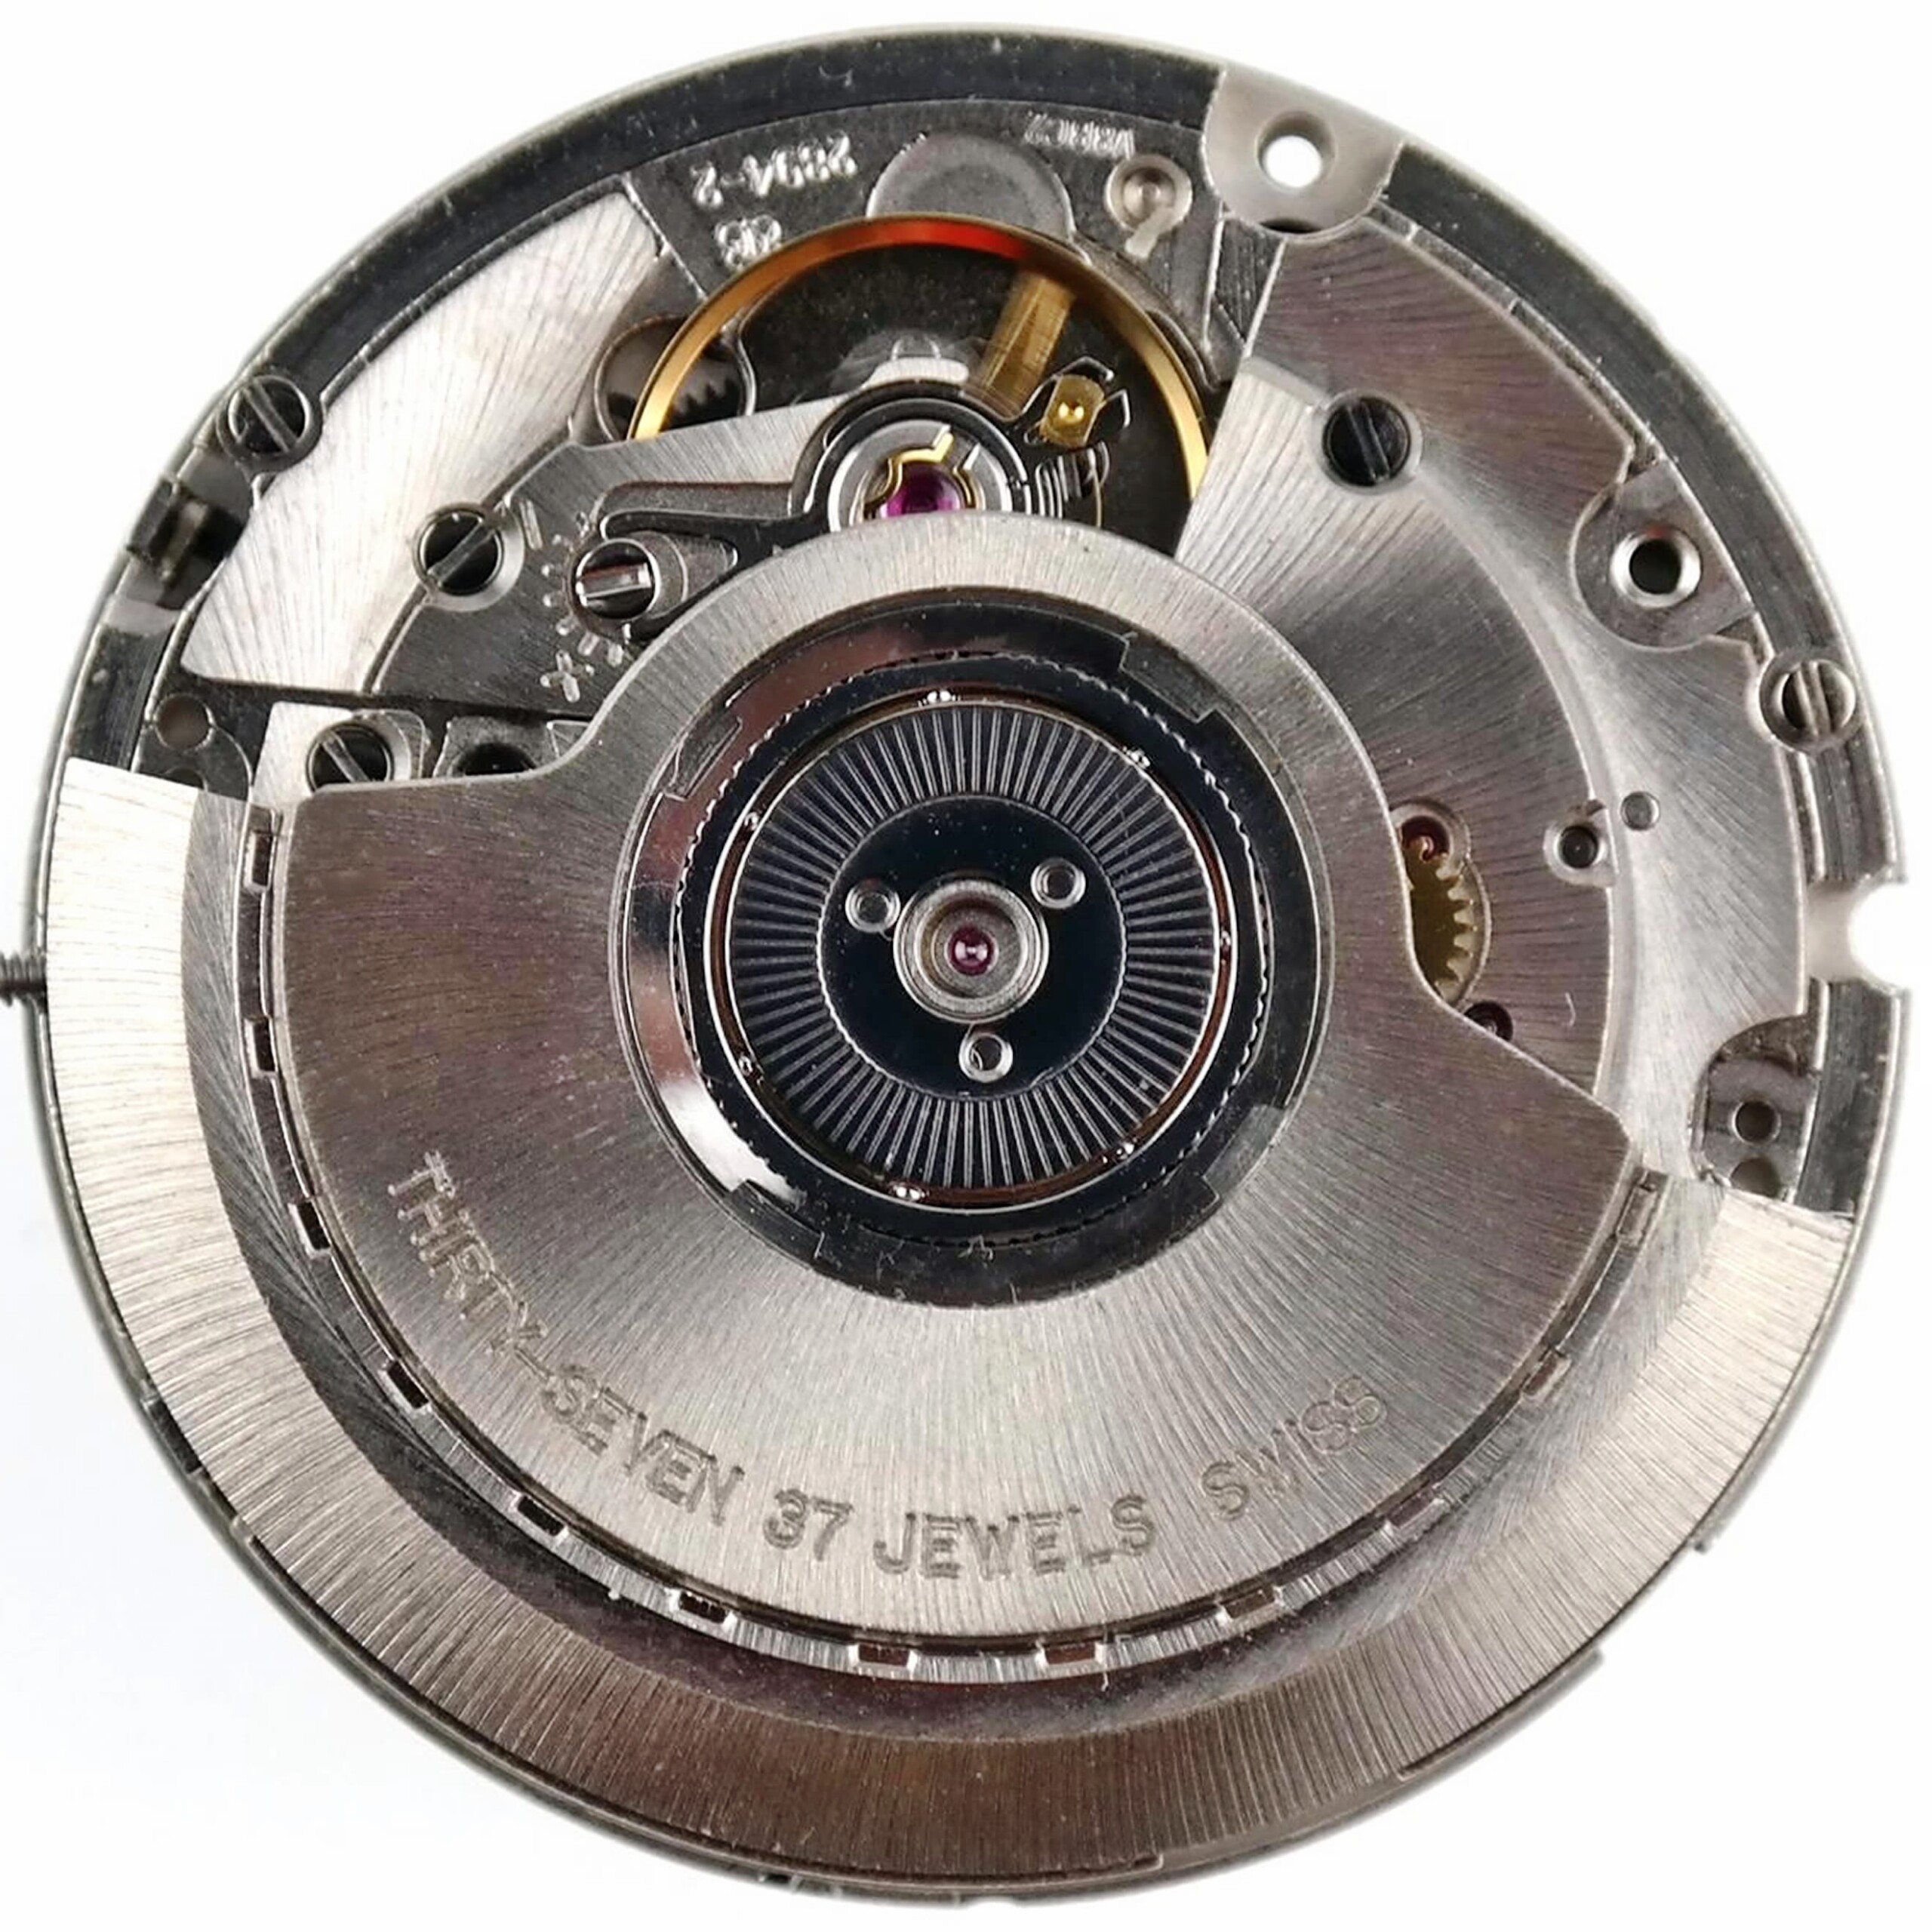 ETA 2894-2 Automatic Chronograph Watch Movement